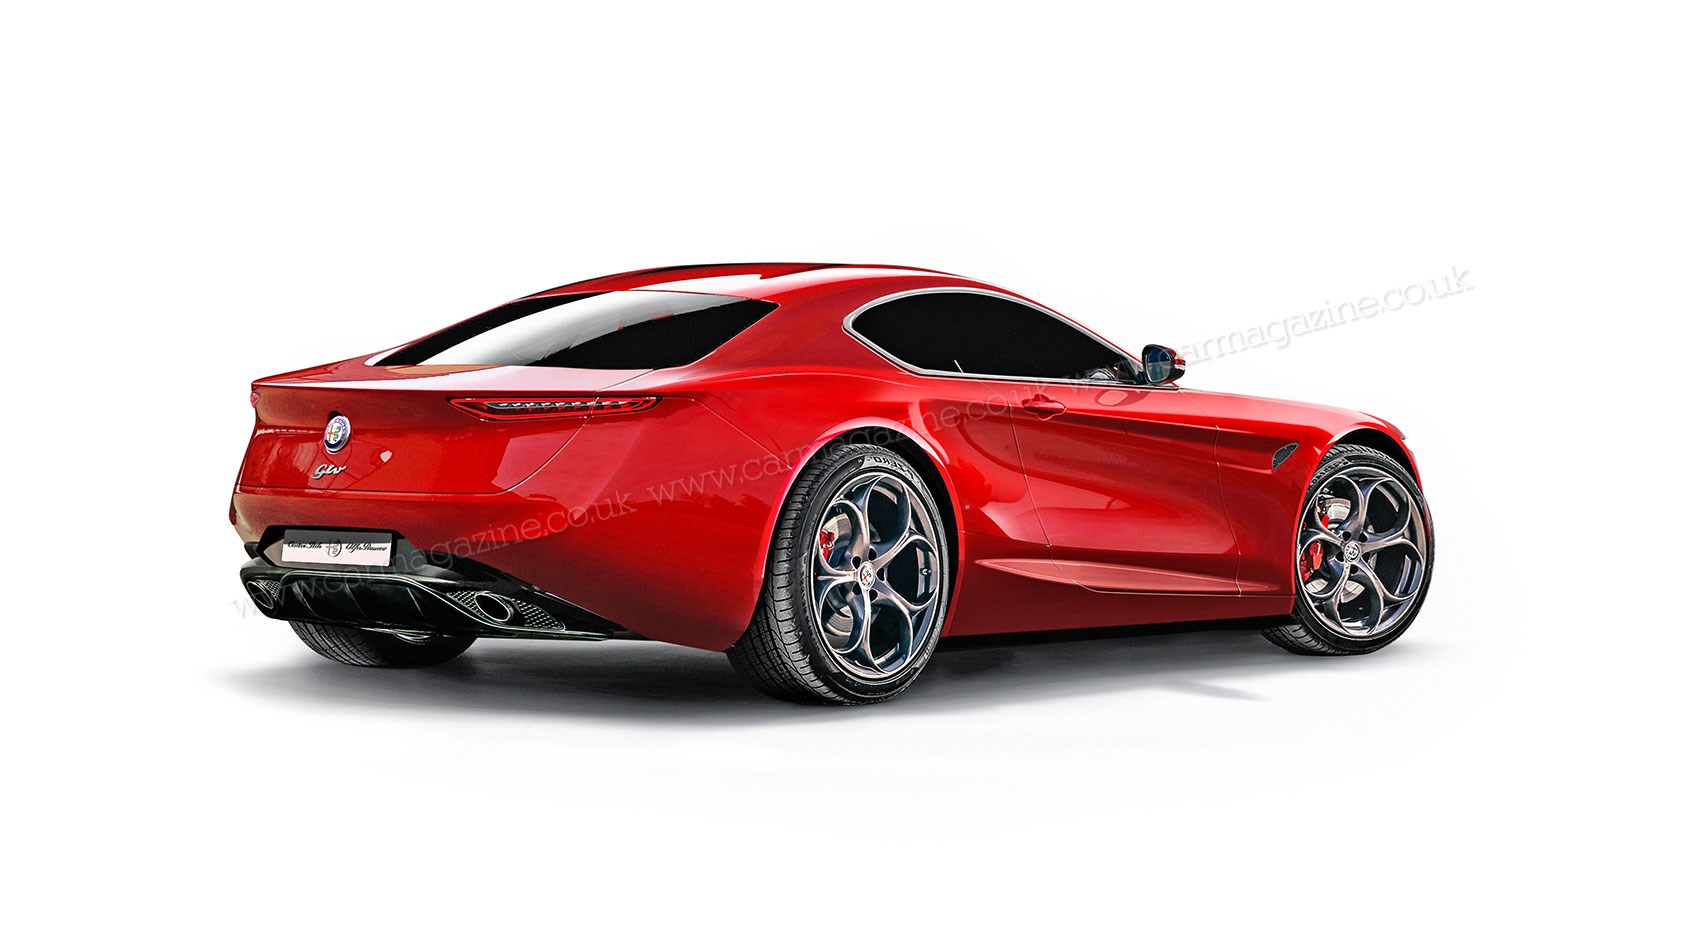 Alfa Romeo Giulietta hatchback and sedan imagined in renders